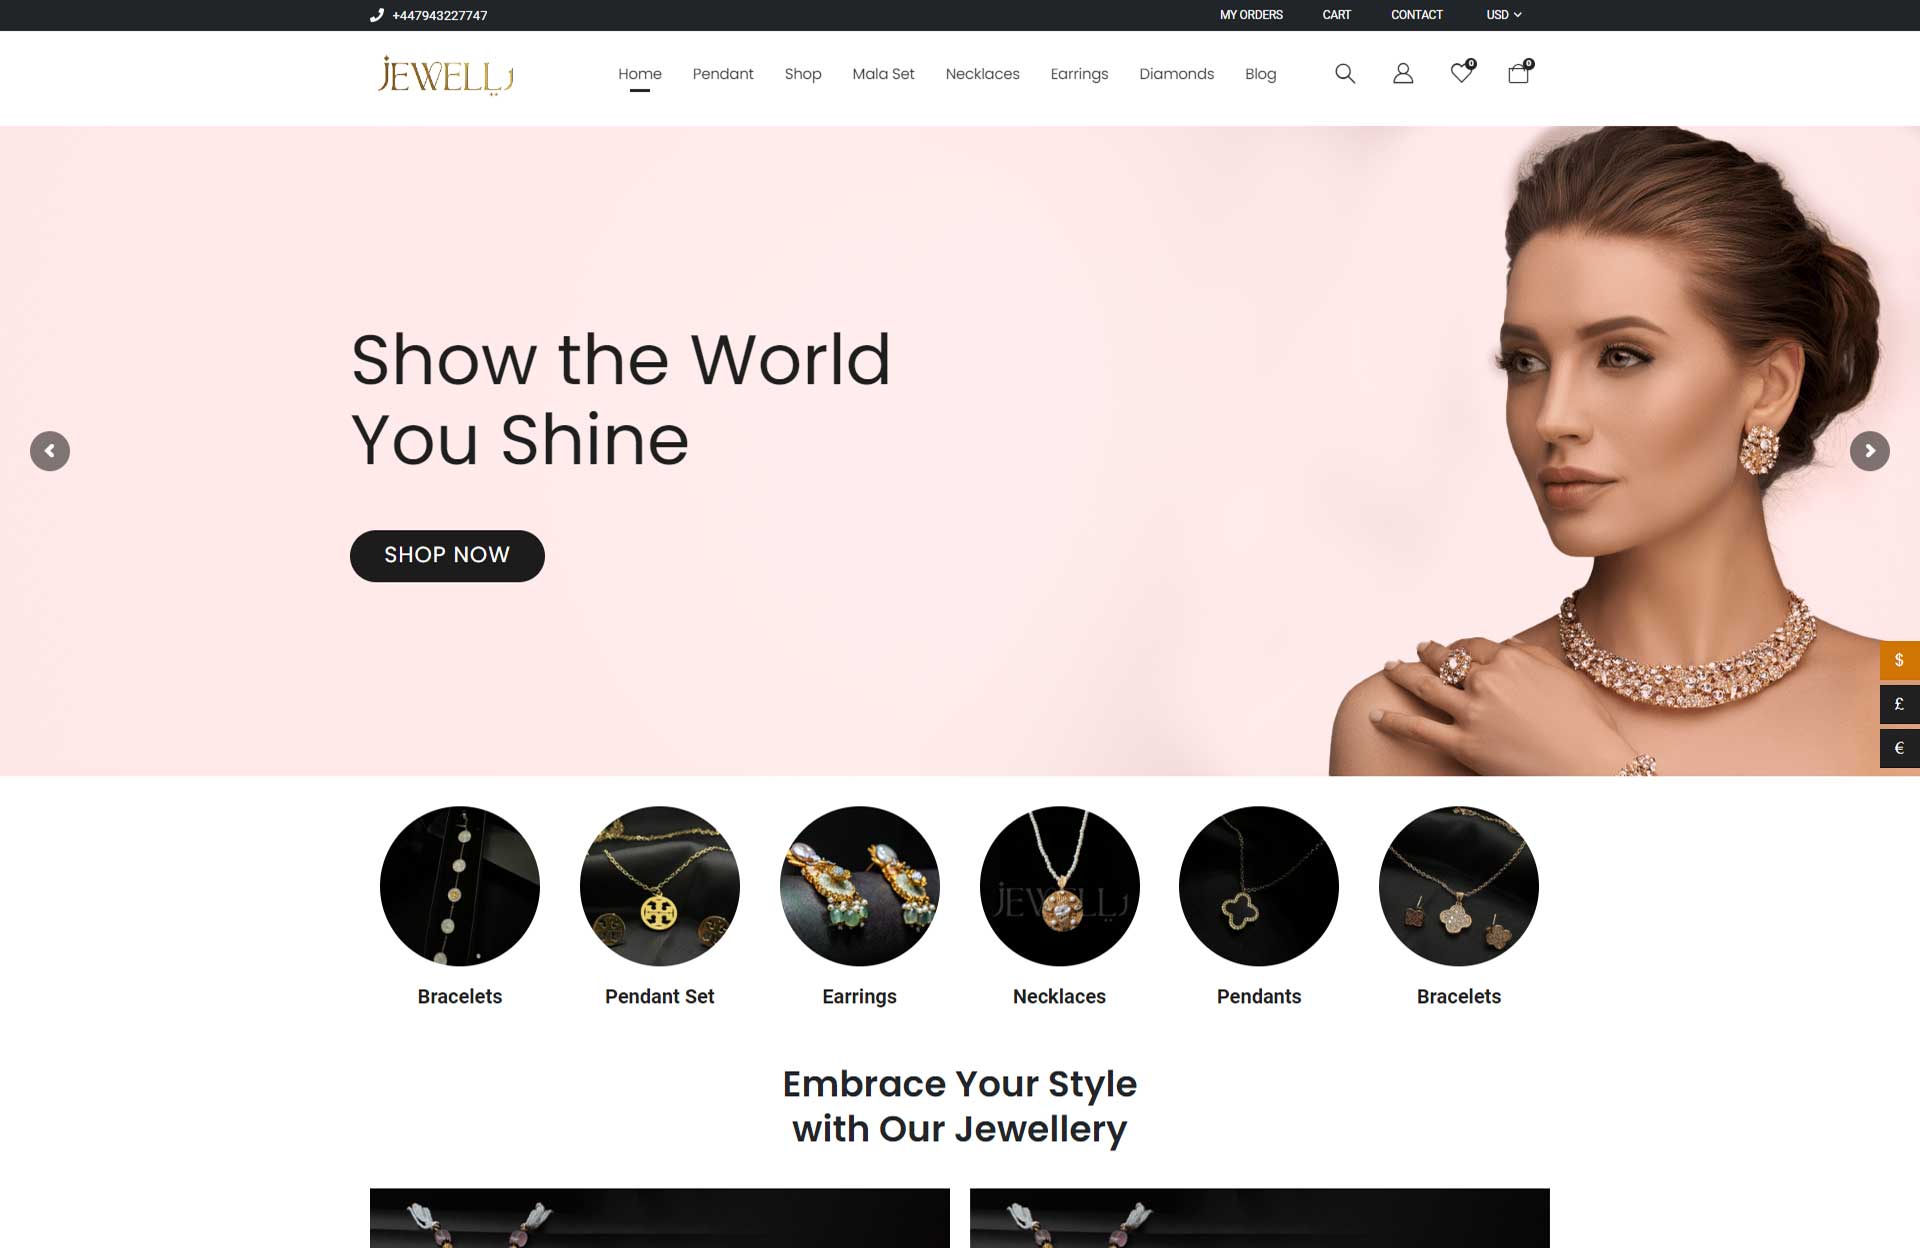 thejewellerya wocommerce website developed by hamza tariq